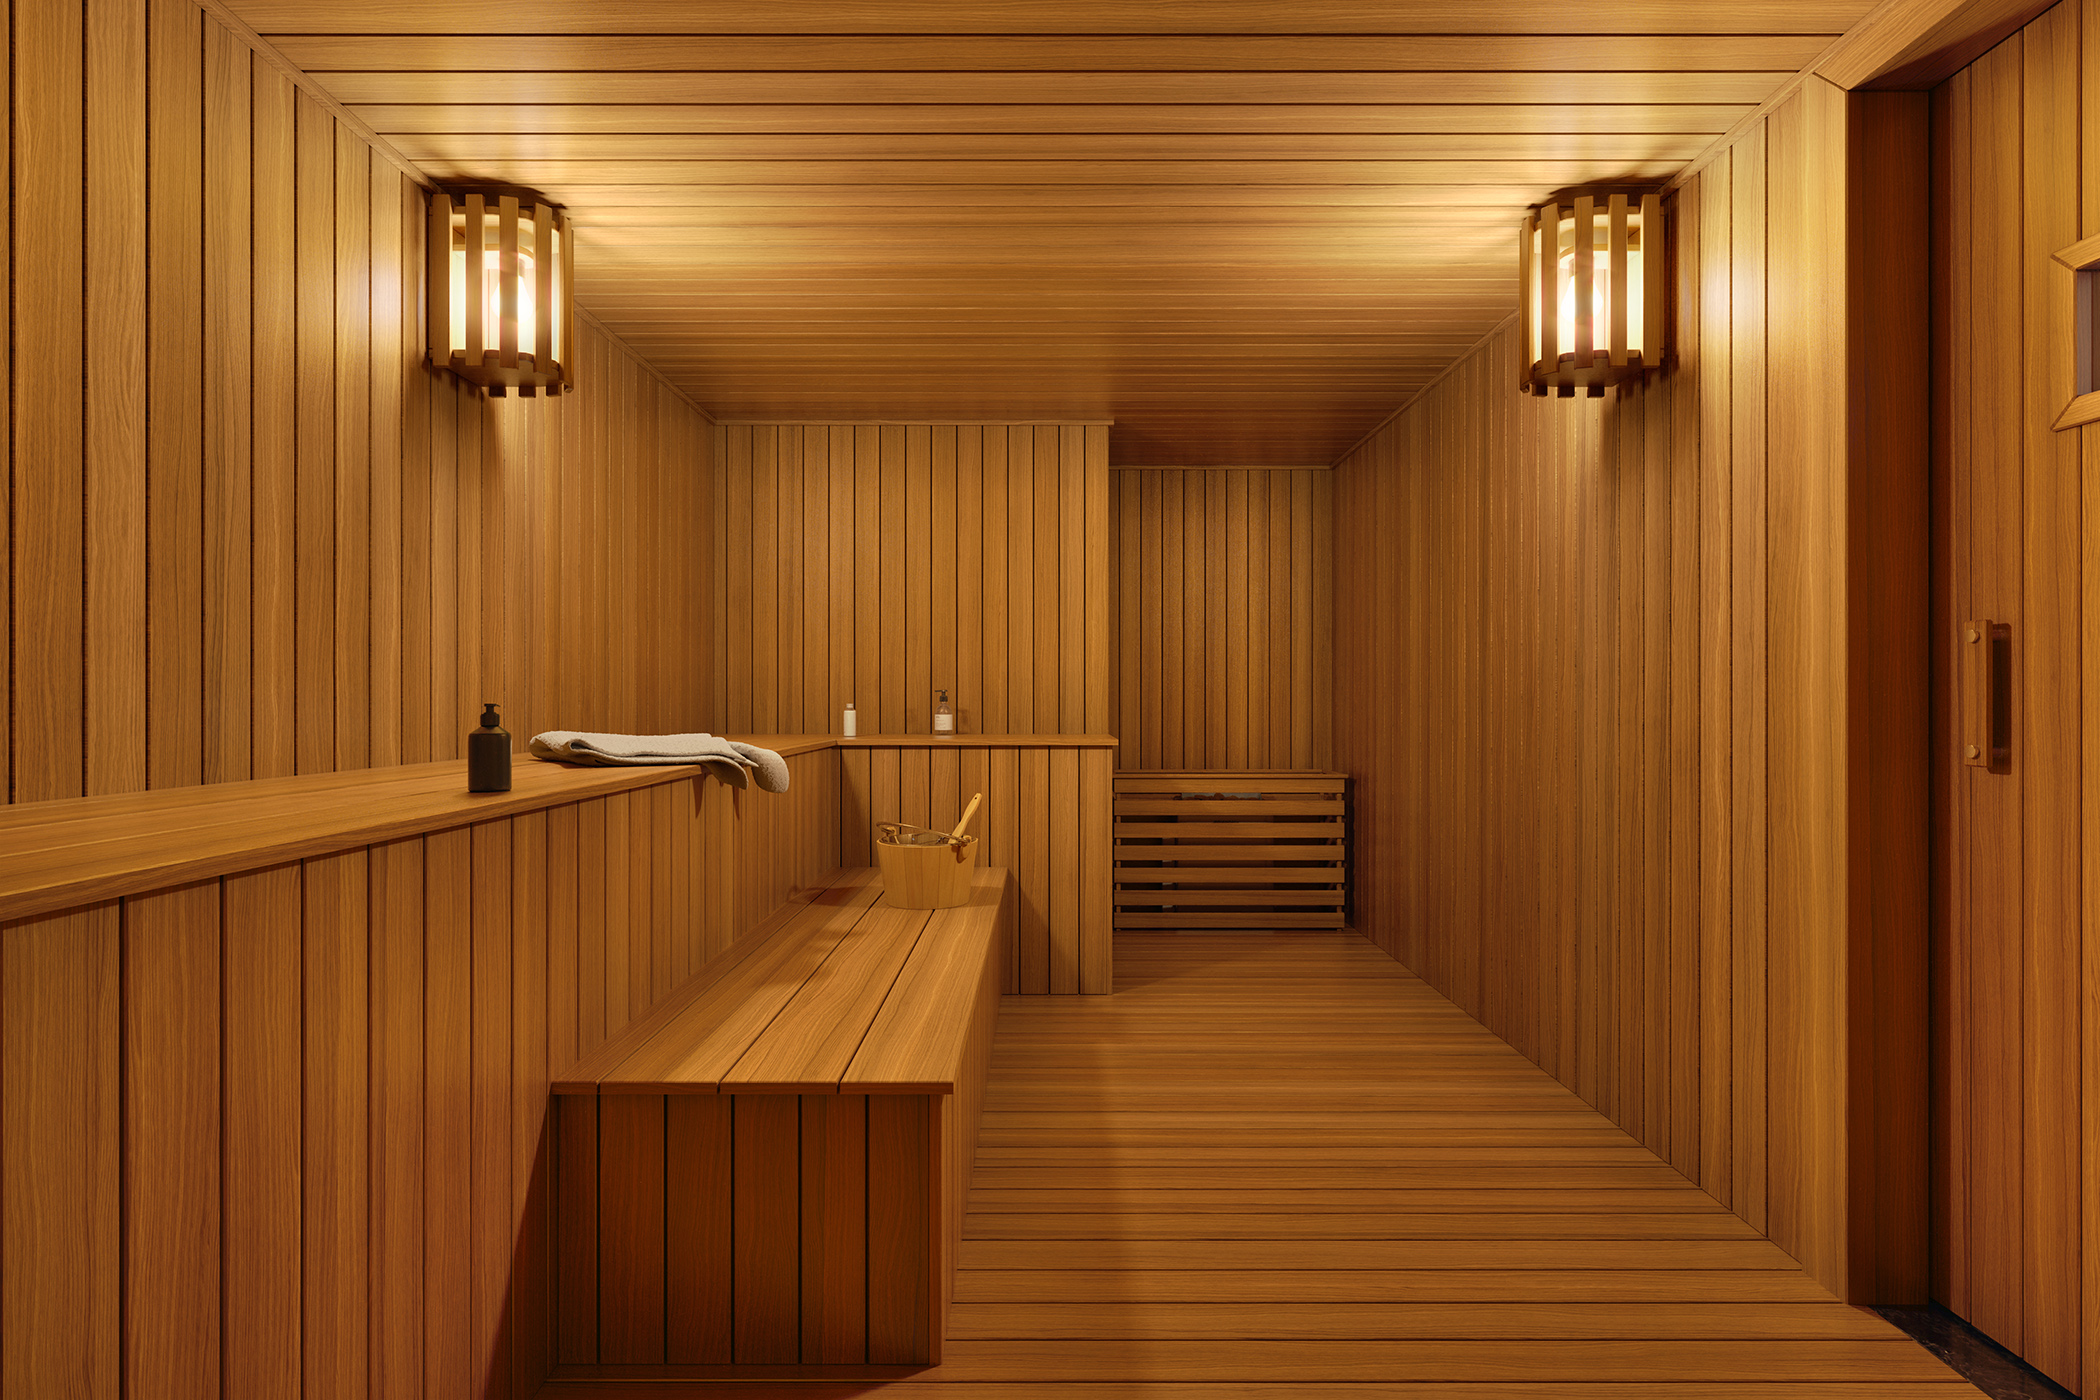 Perspectiva artística da sauna